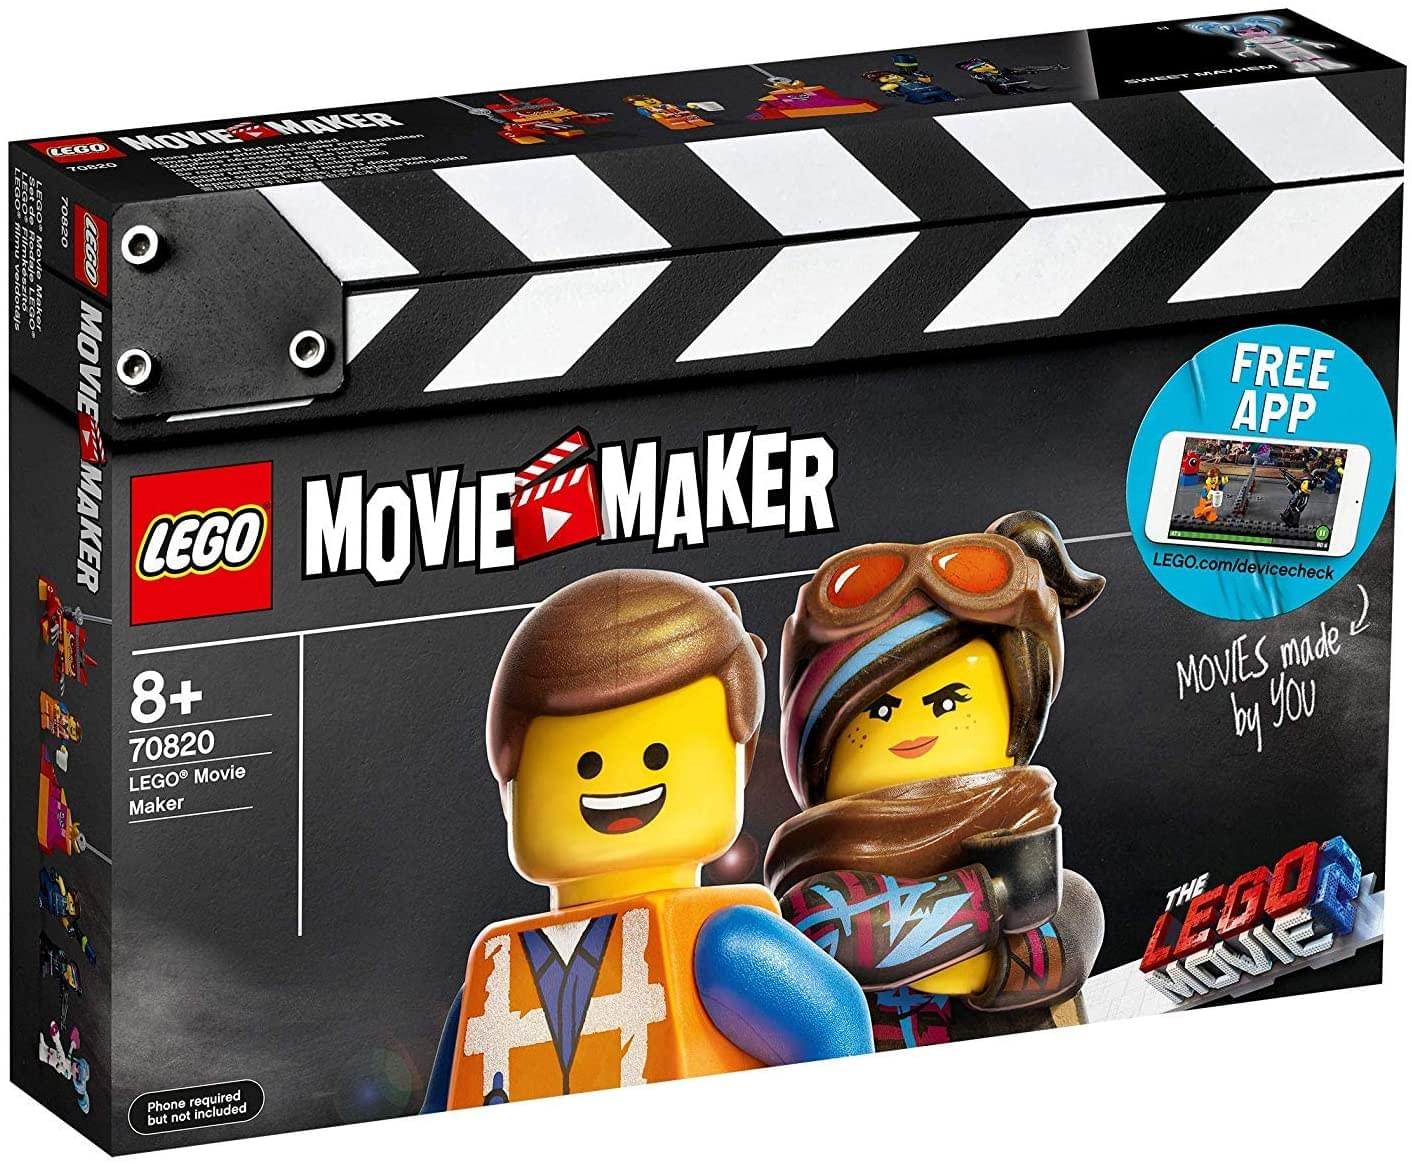 The LEGO Movie 2 LEGO Movie Maker Set